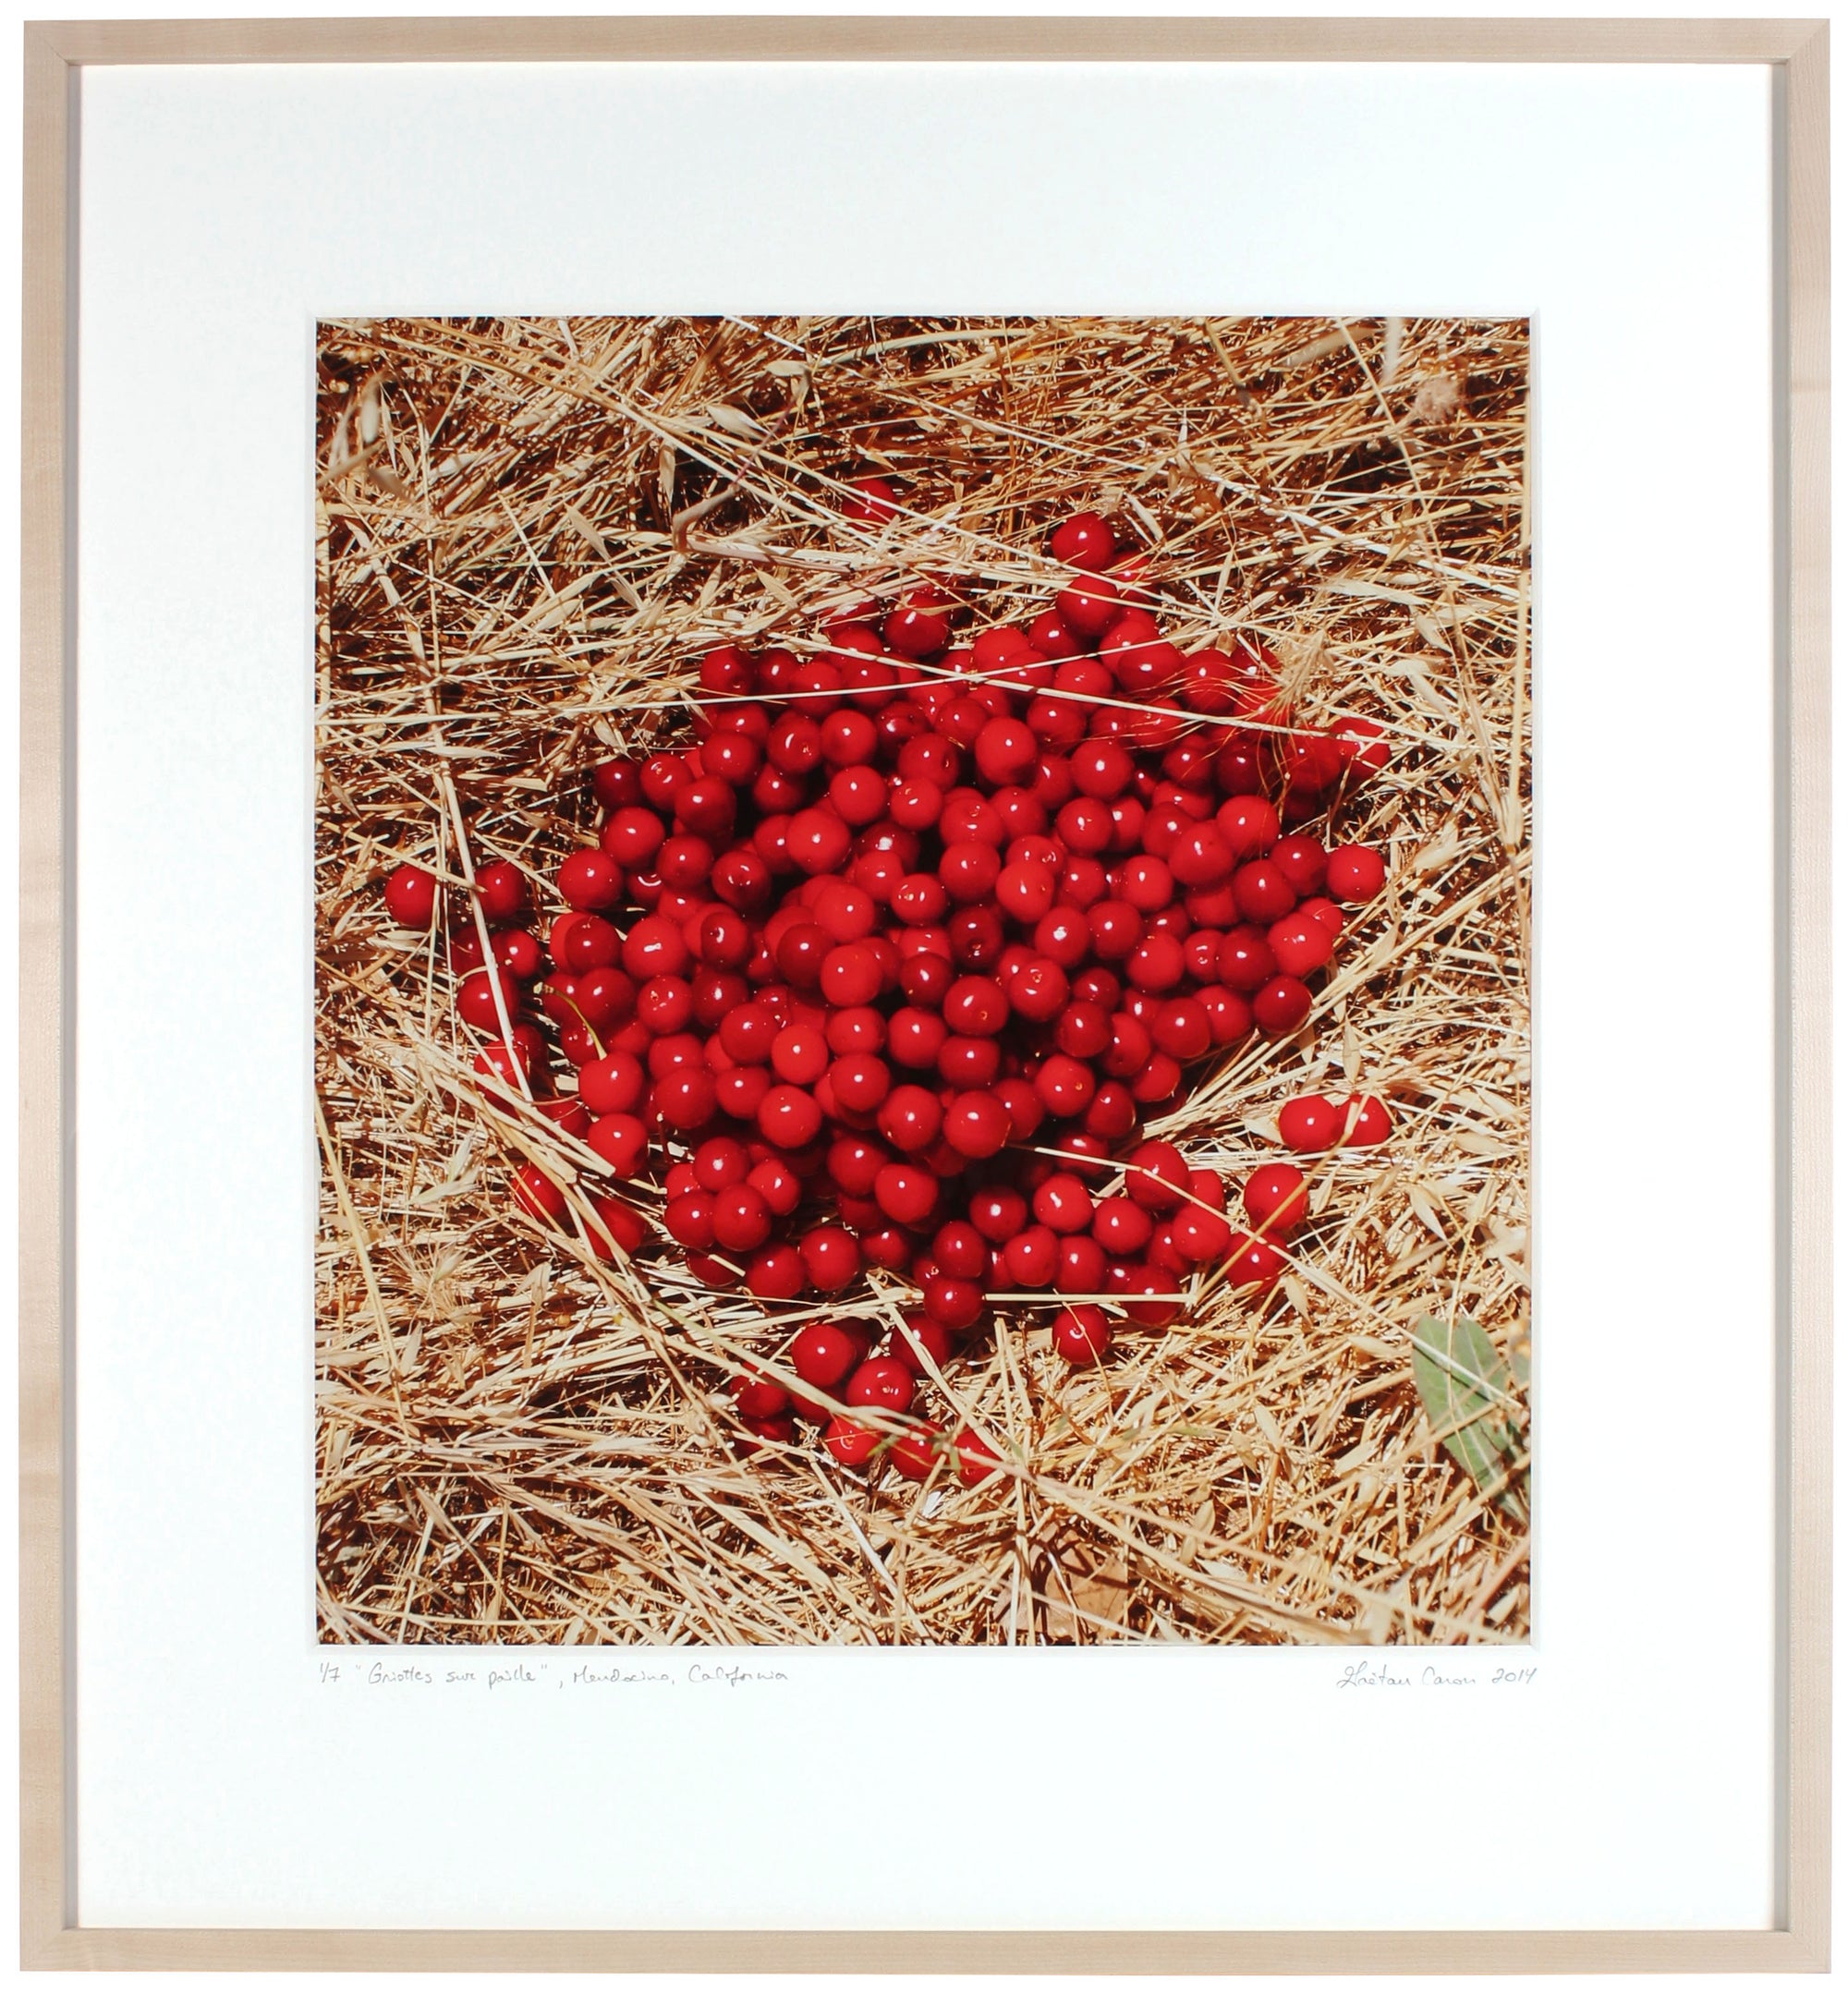 <I>Griottes sur paille (Morello Cherries on Straw</I><br>Mendocino, California, 2014<br><br>GC0386